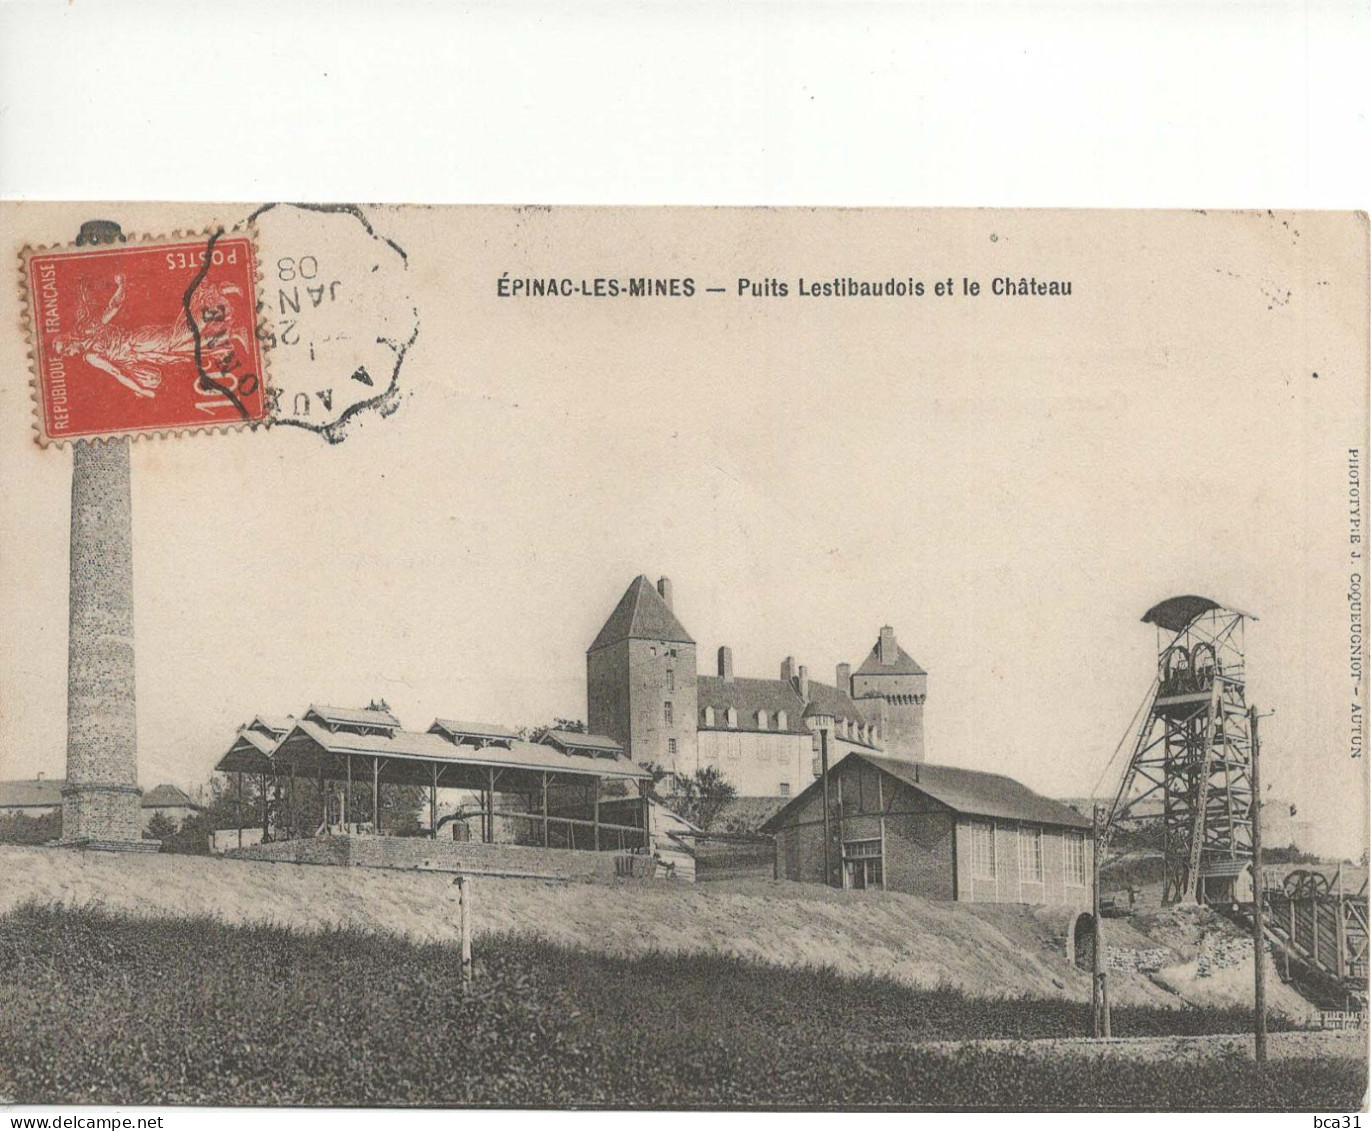 Lot de 14 cartes postales : Thème: La Mine en FRANCE